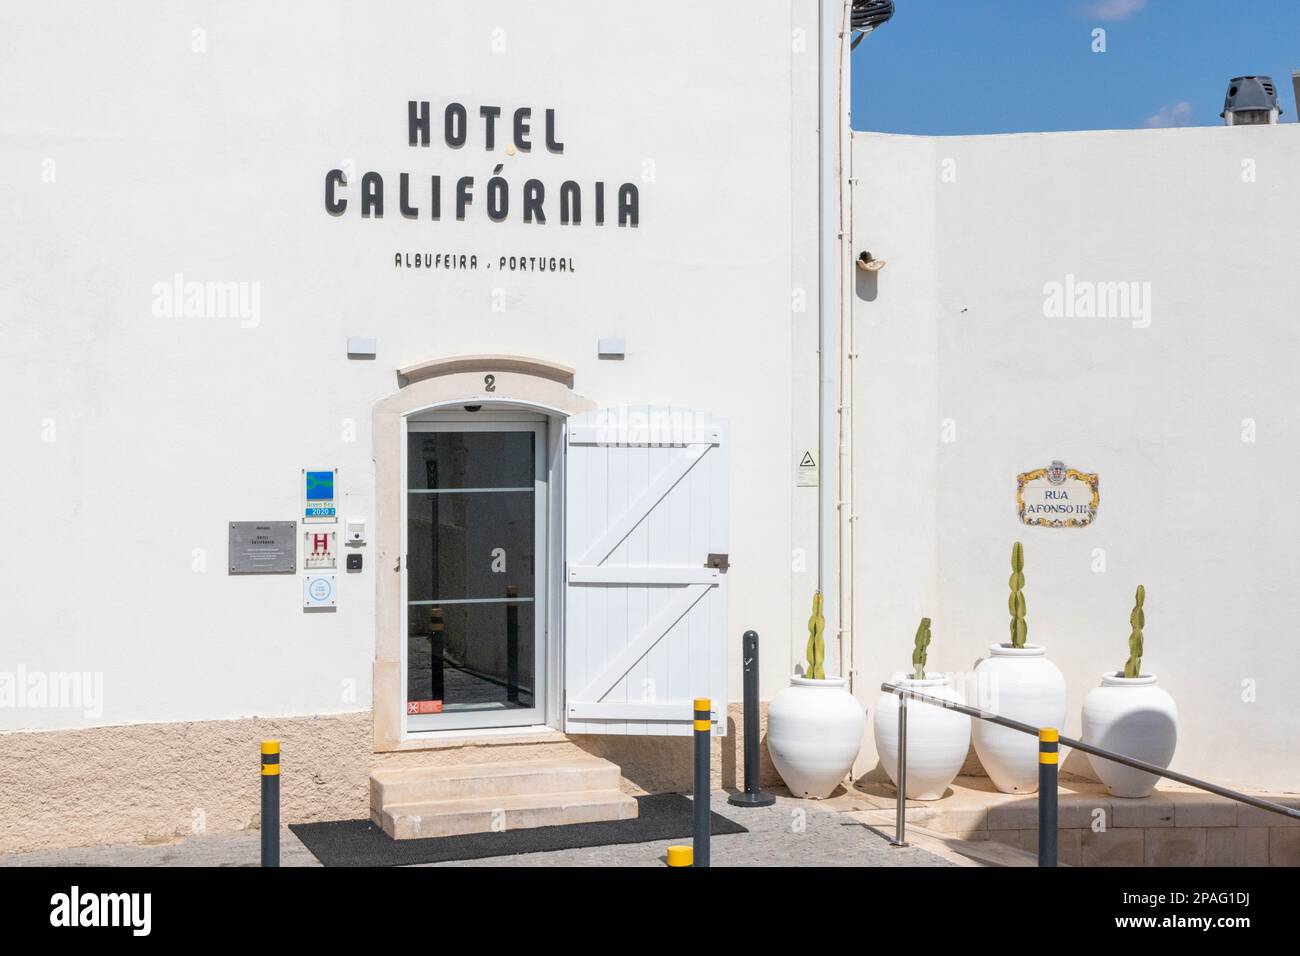 Welcome to the Hotel California, Albufeira, Algarve, Portugal Stock Photo